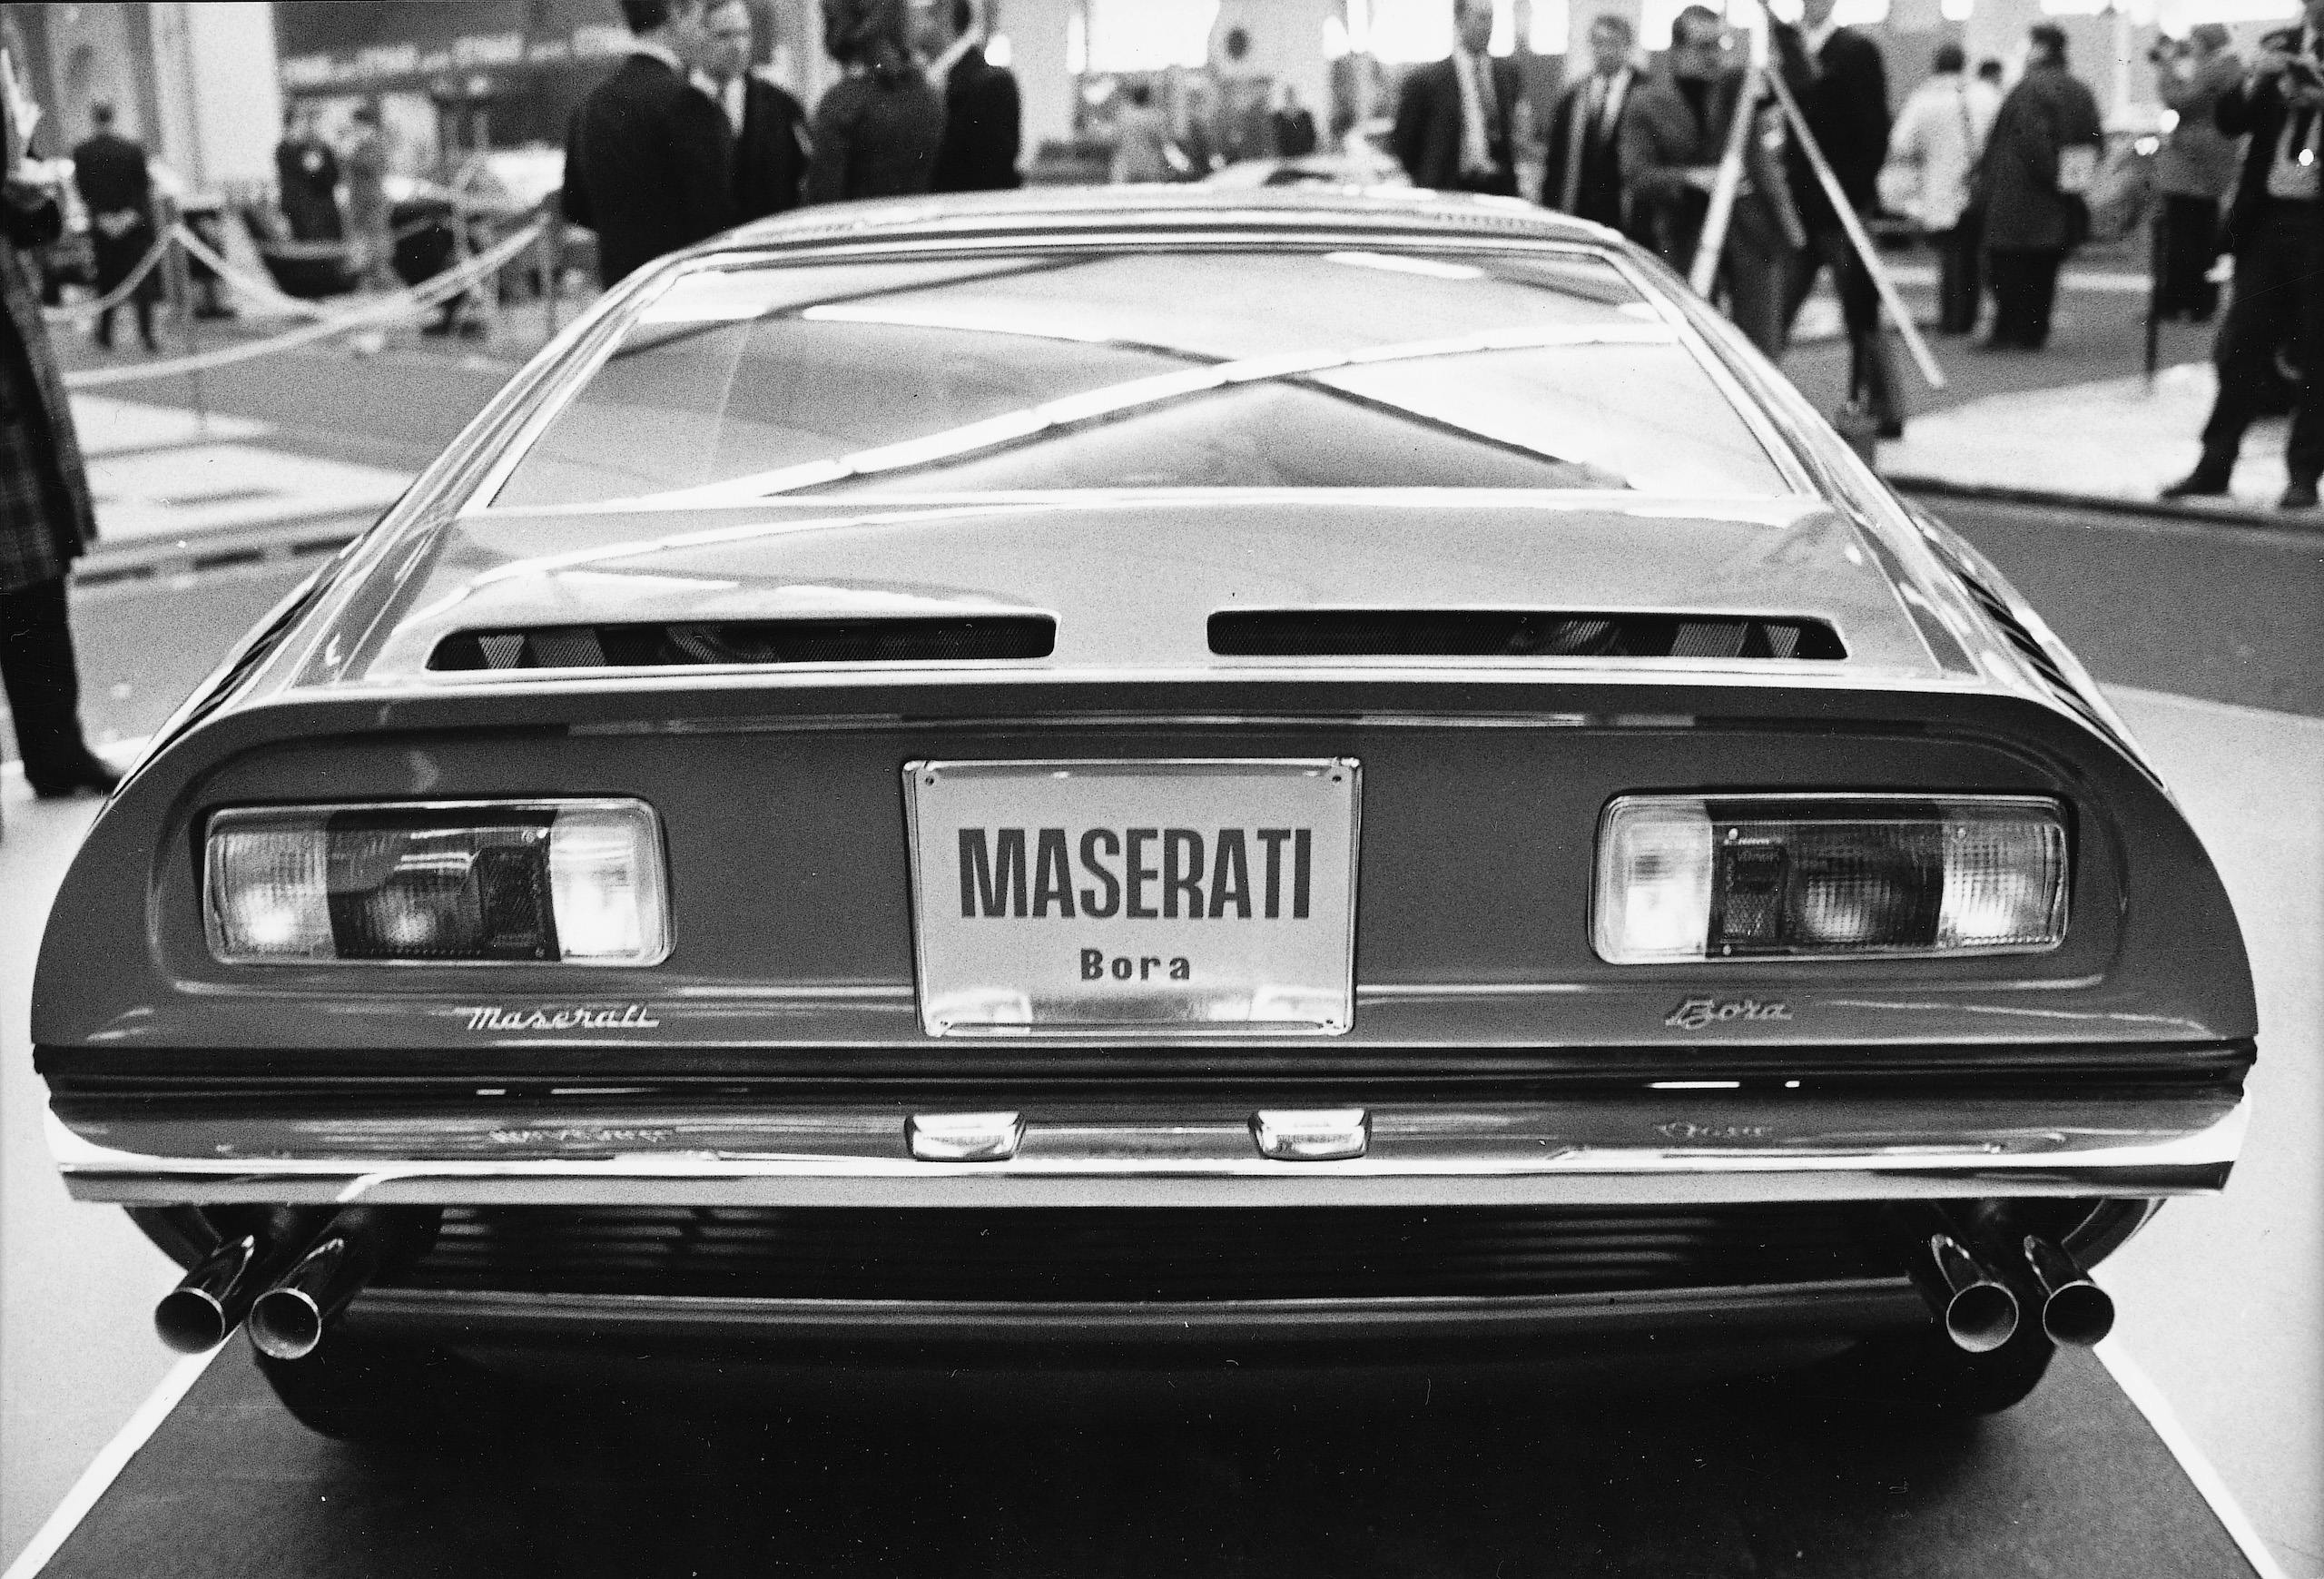 Maserati Bora rear historical black and white